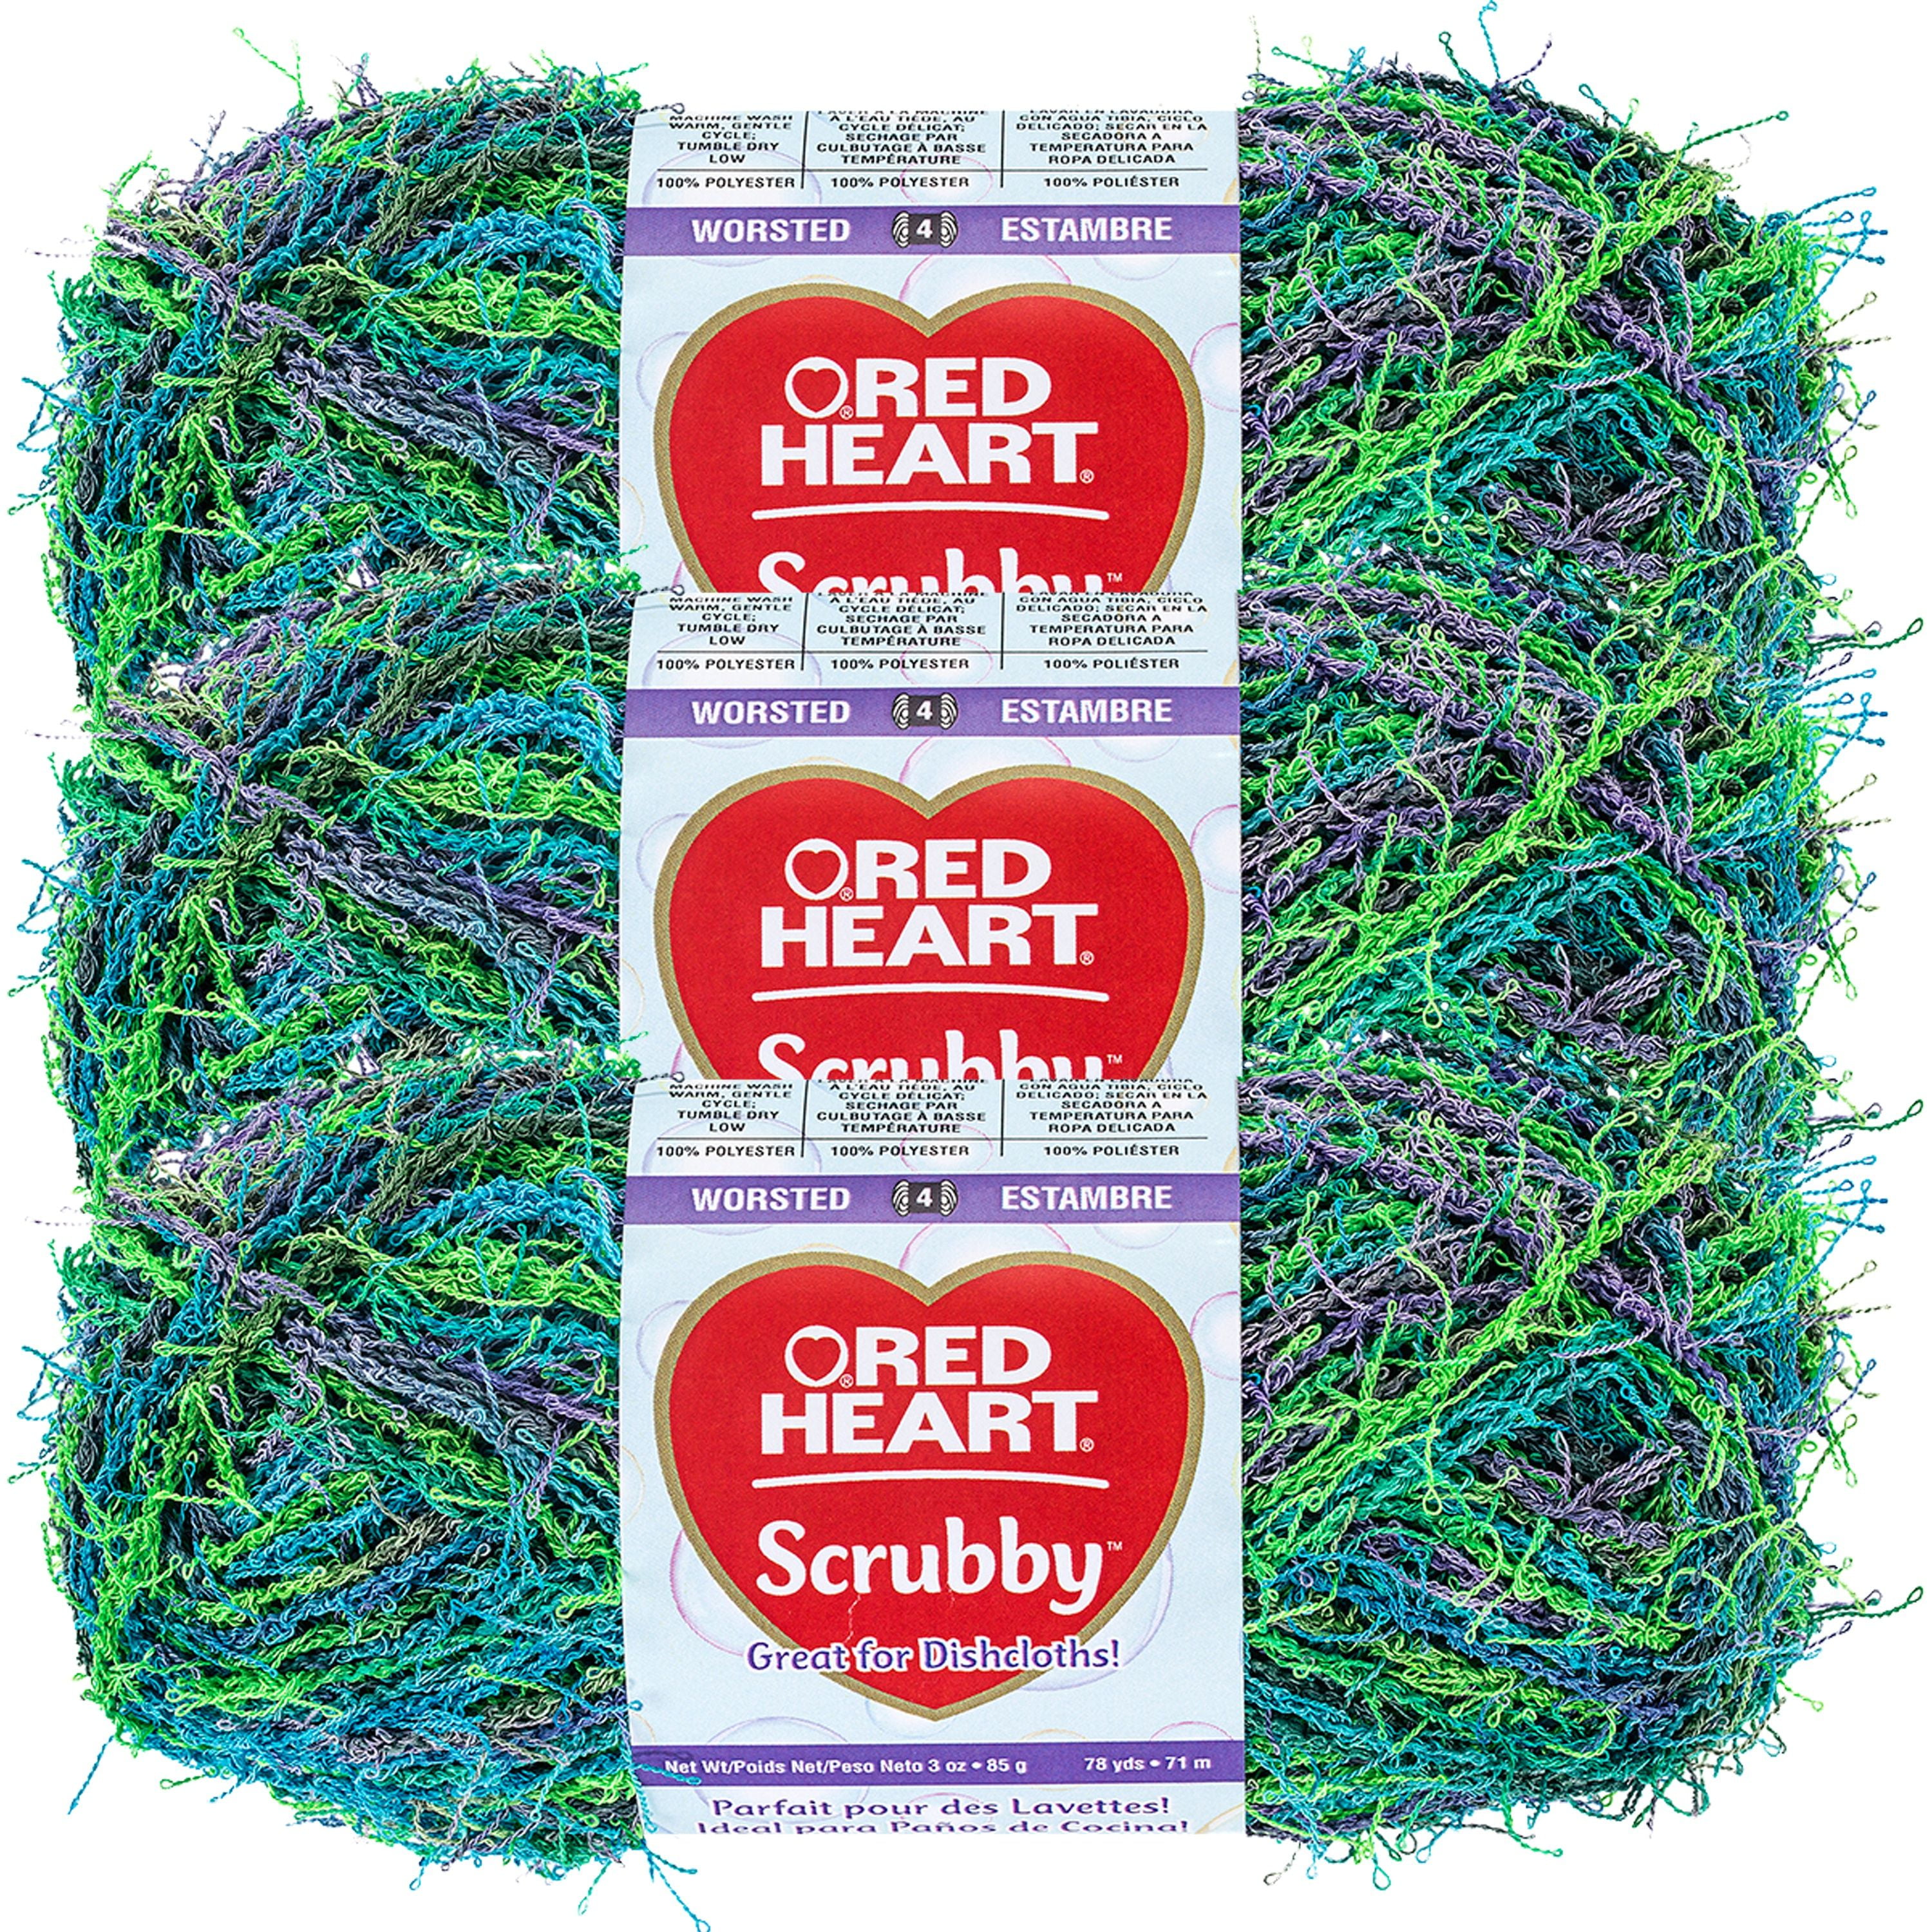 3-Pk Red Heart Scrubby Smoothie Cotton Yarn Crochet Knitting in Brite  Orange